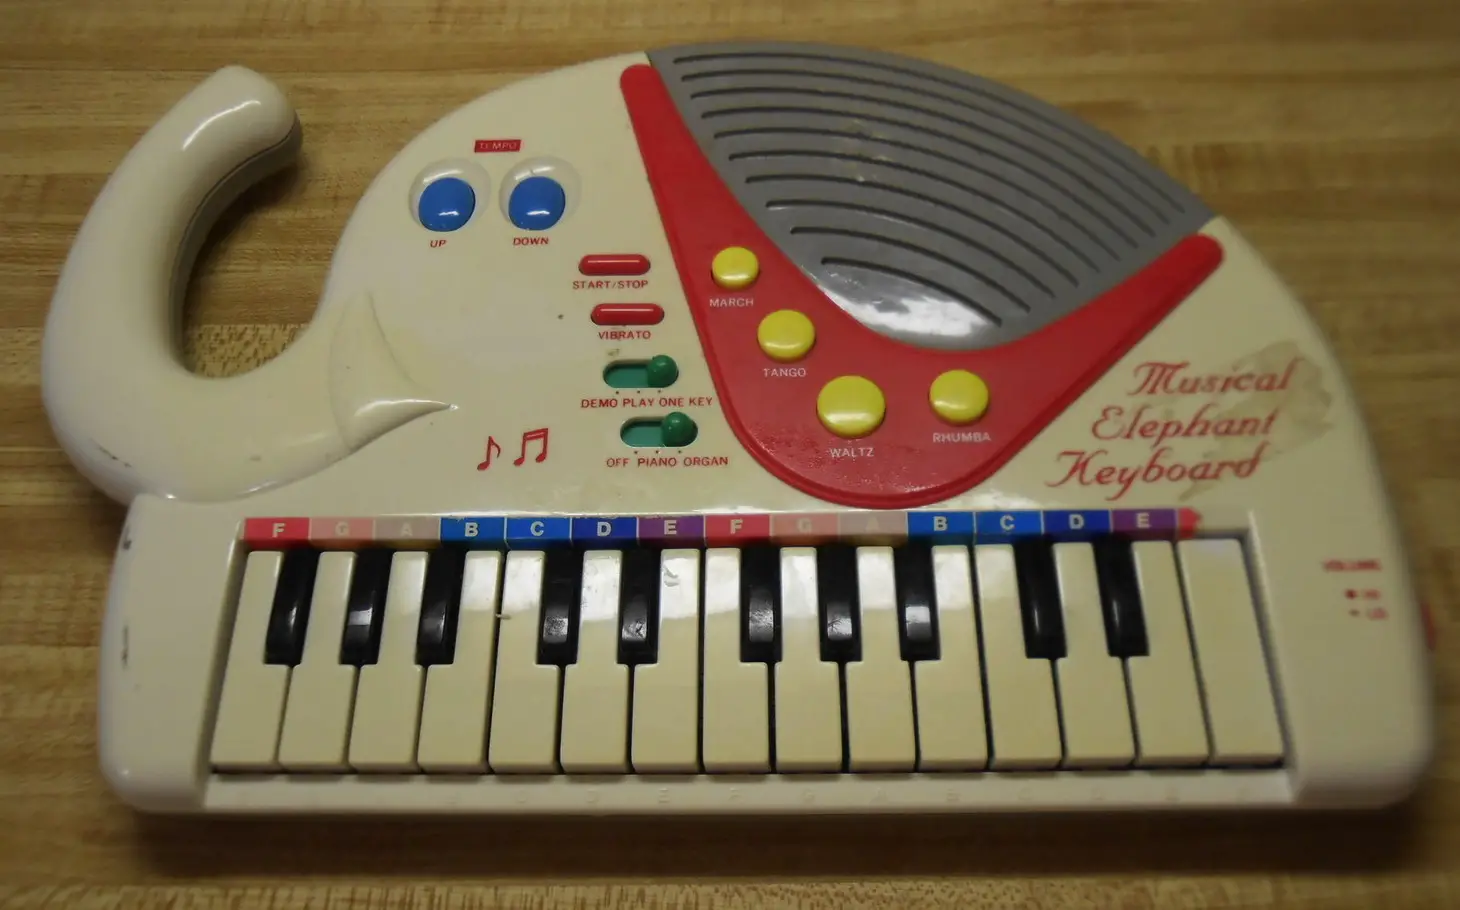 Musical Elephant Keyboard made for RadioShack